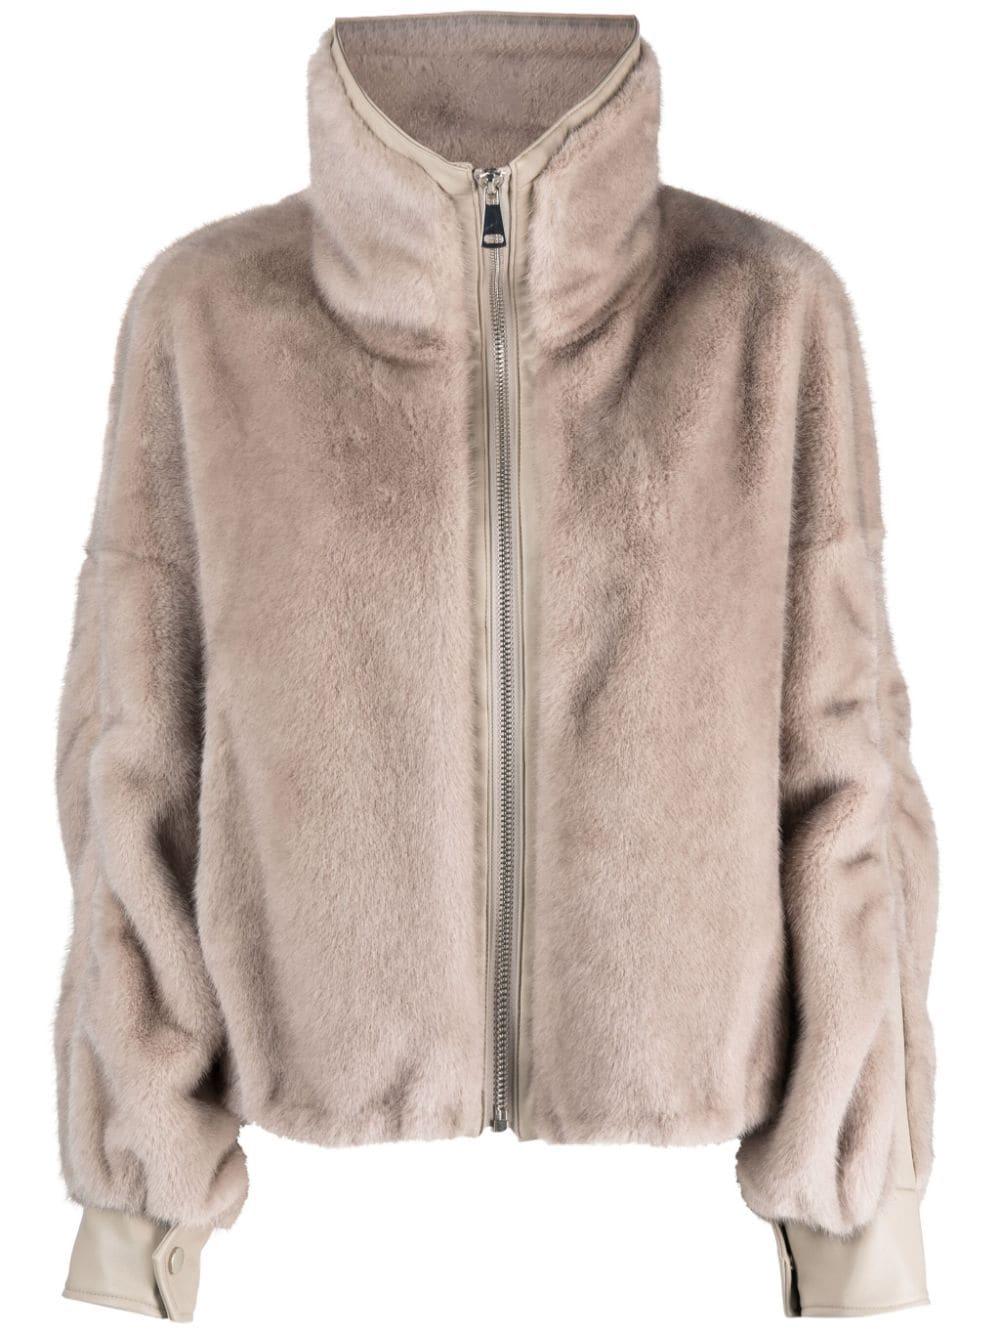 Essentiel Antwerp Faux-fur Zip-up Jacket in Natural | Lyst